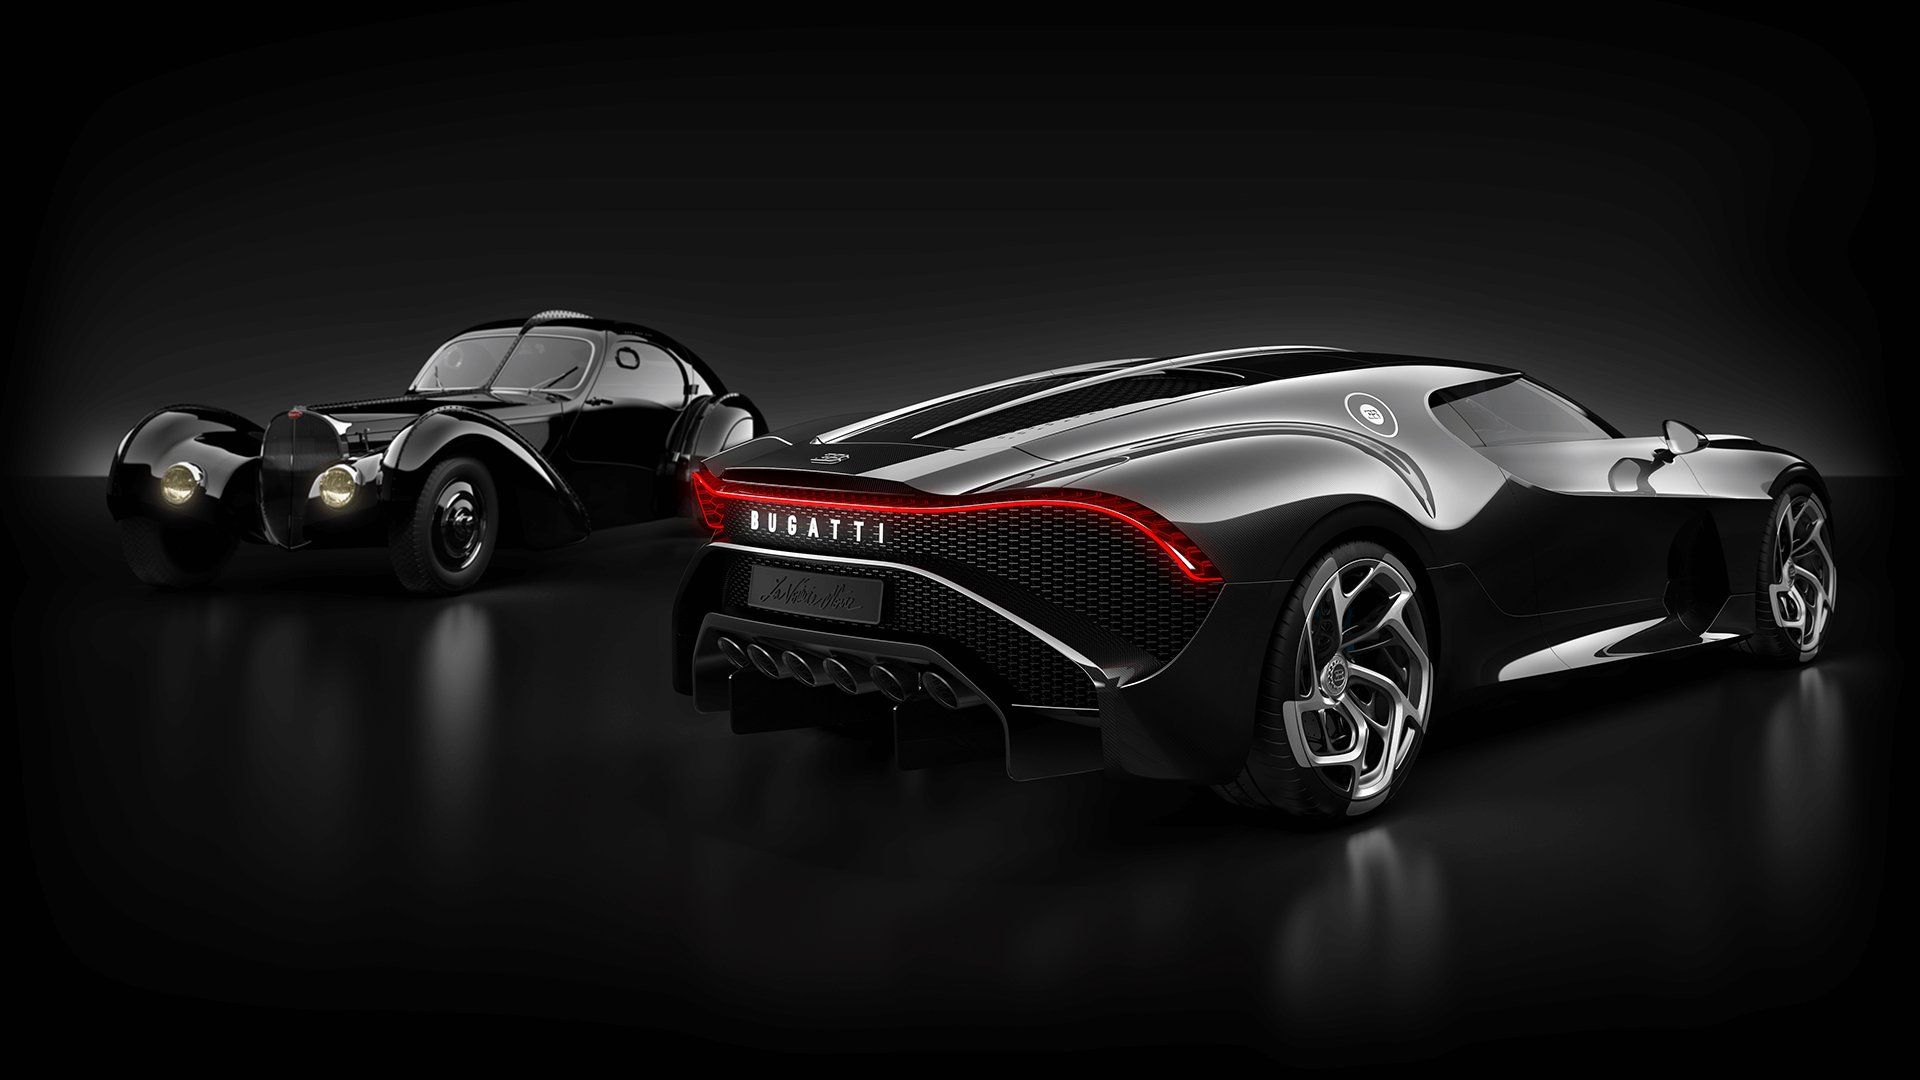 At $18.9 million, Bugatti’s new La Voiture Noire is the most expensive car ever